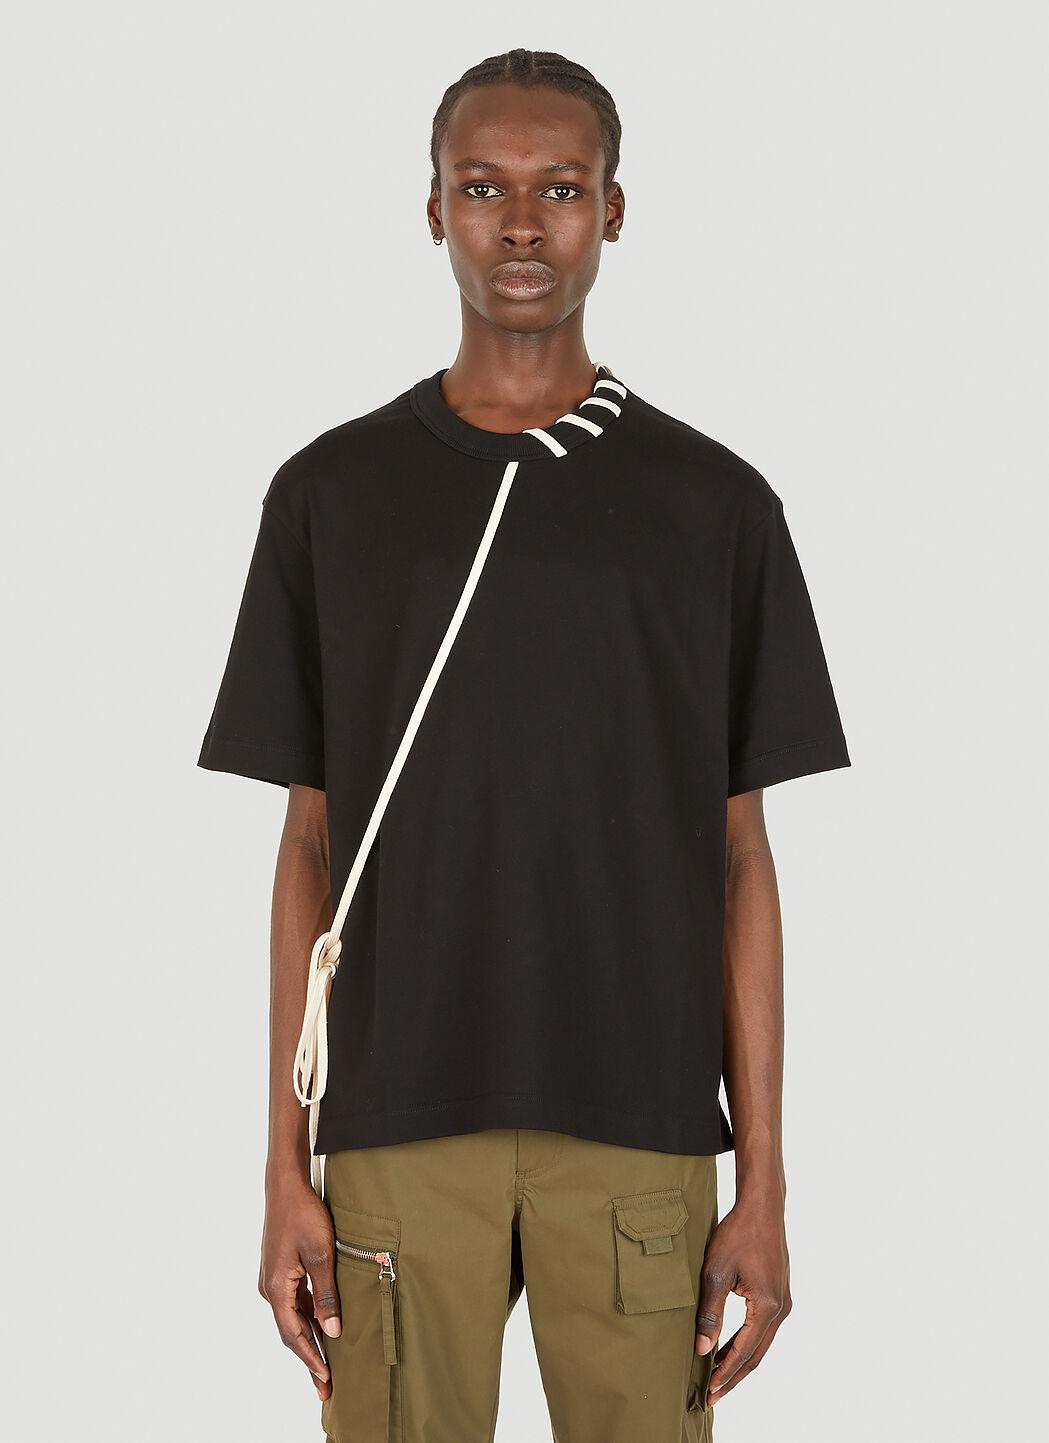 Craig Green Laced T-Shirt Black cgr0152005